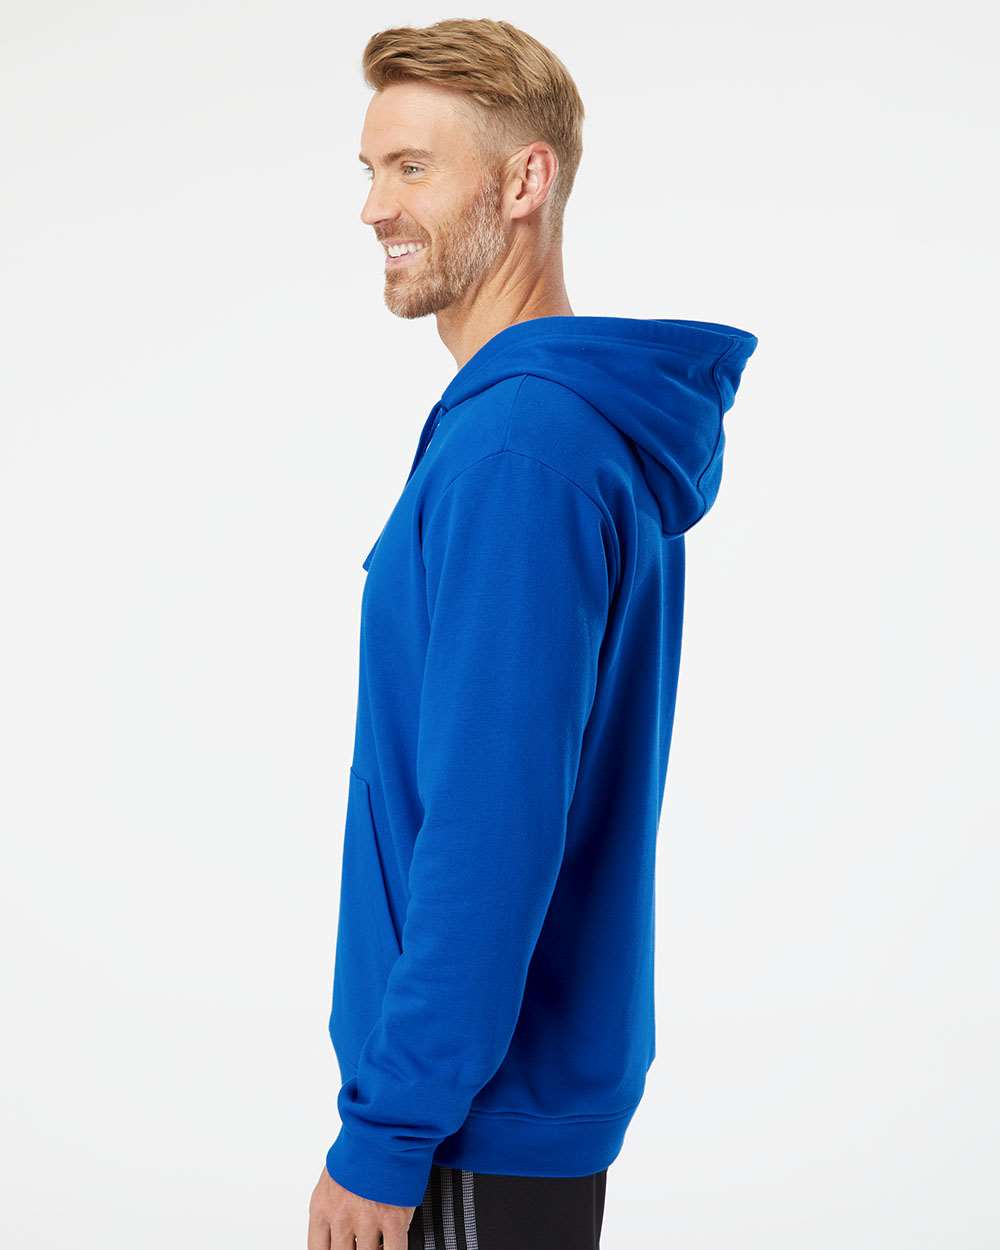 Adidas Fleece Hooded Sweatshirt #A432 Royal Blue Side